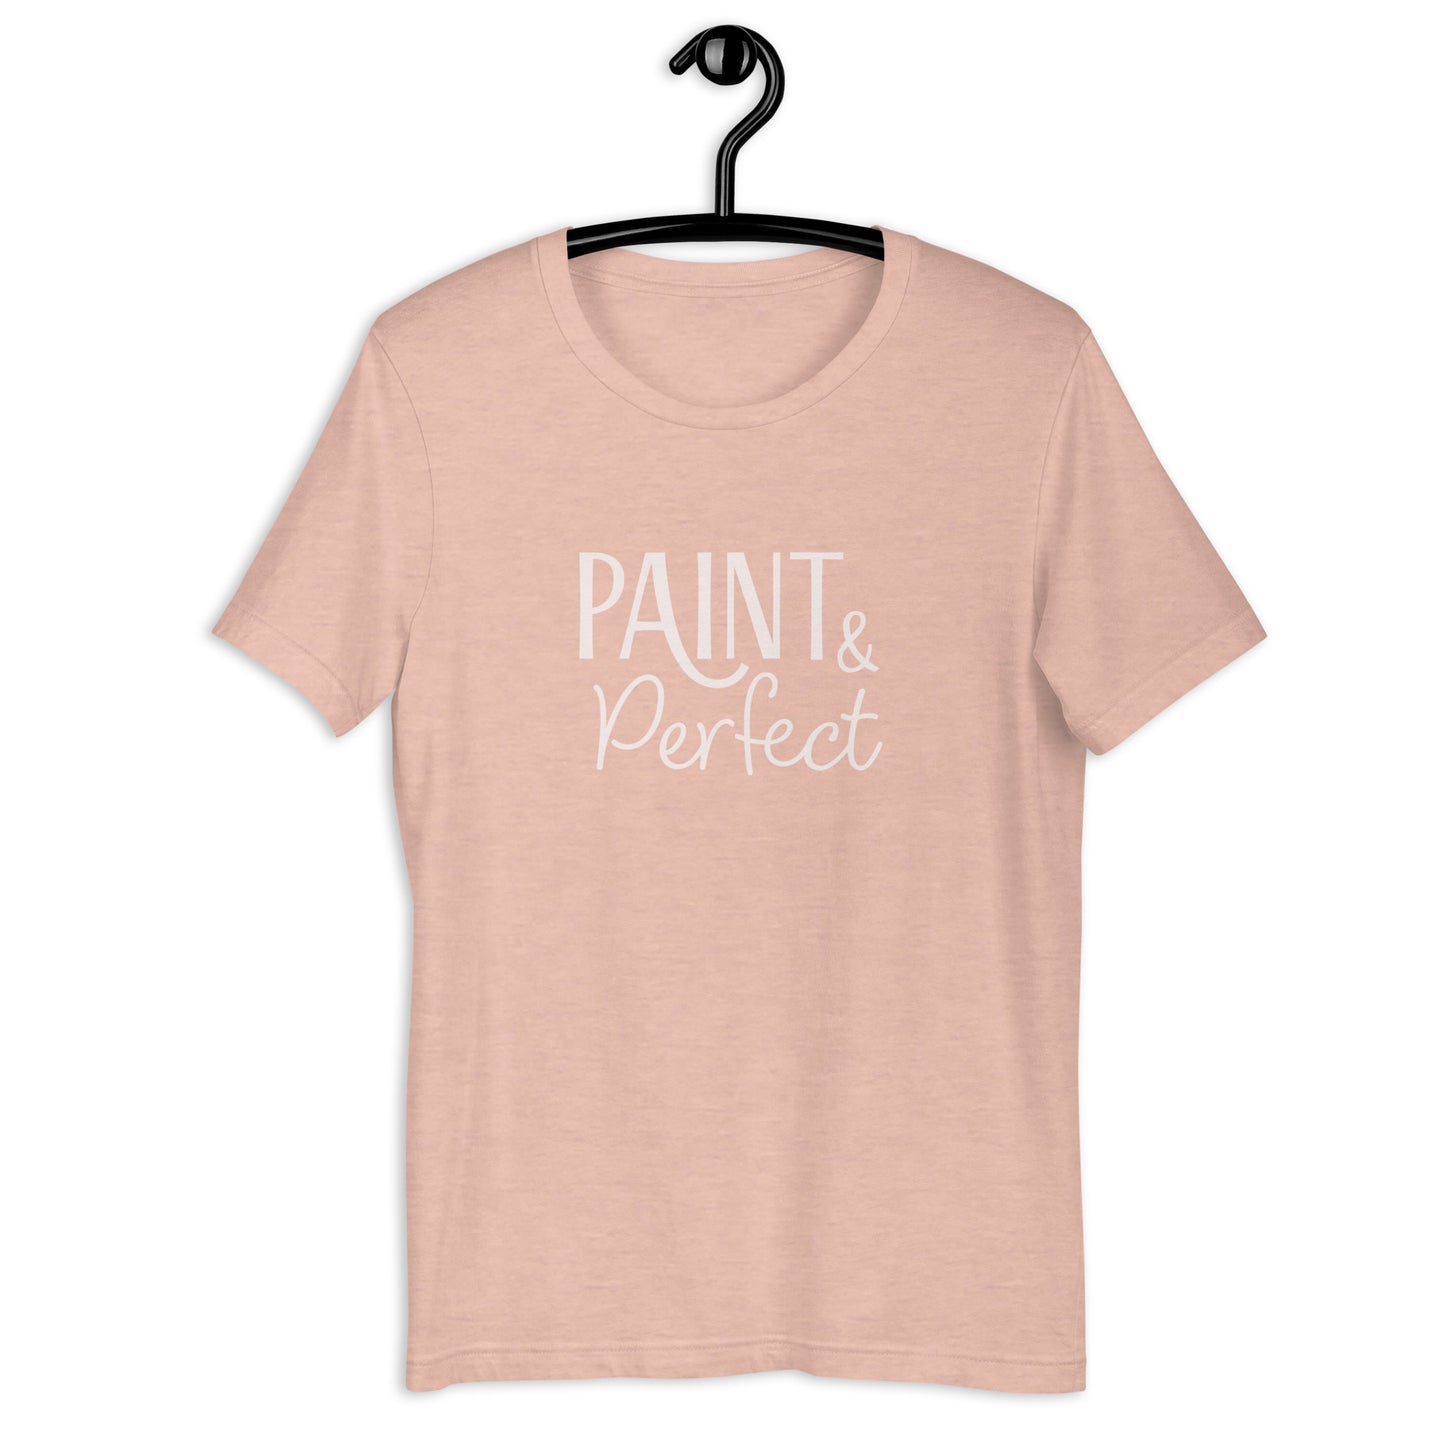 Paint & Perfect, Equestrian T-shirt